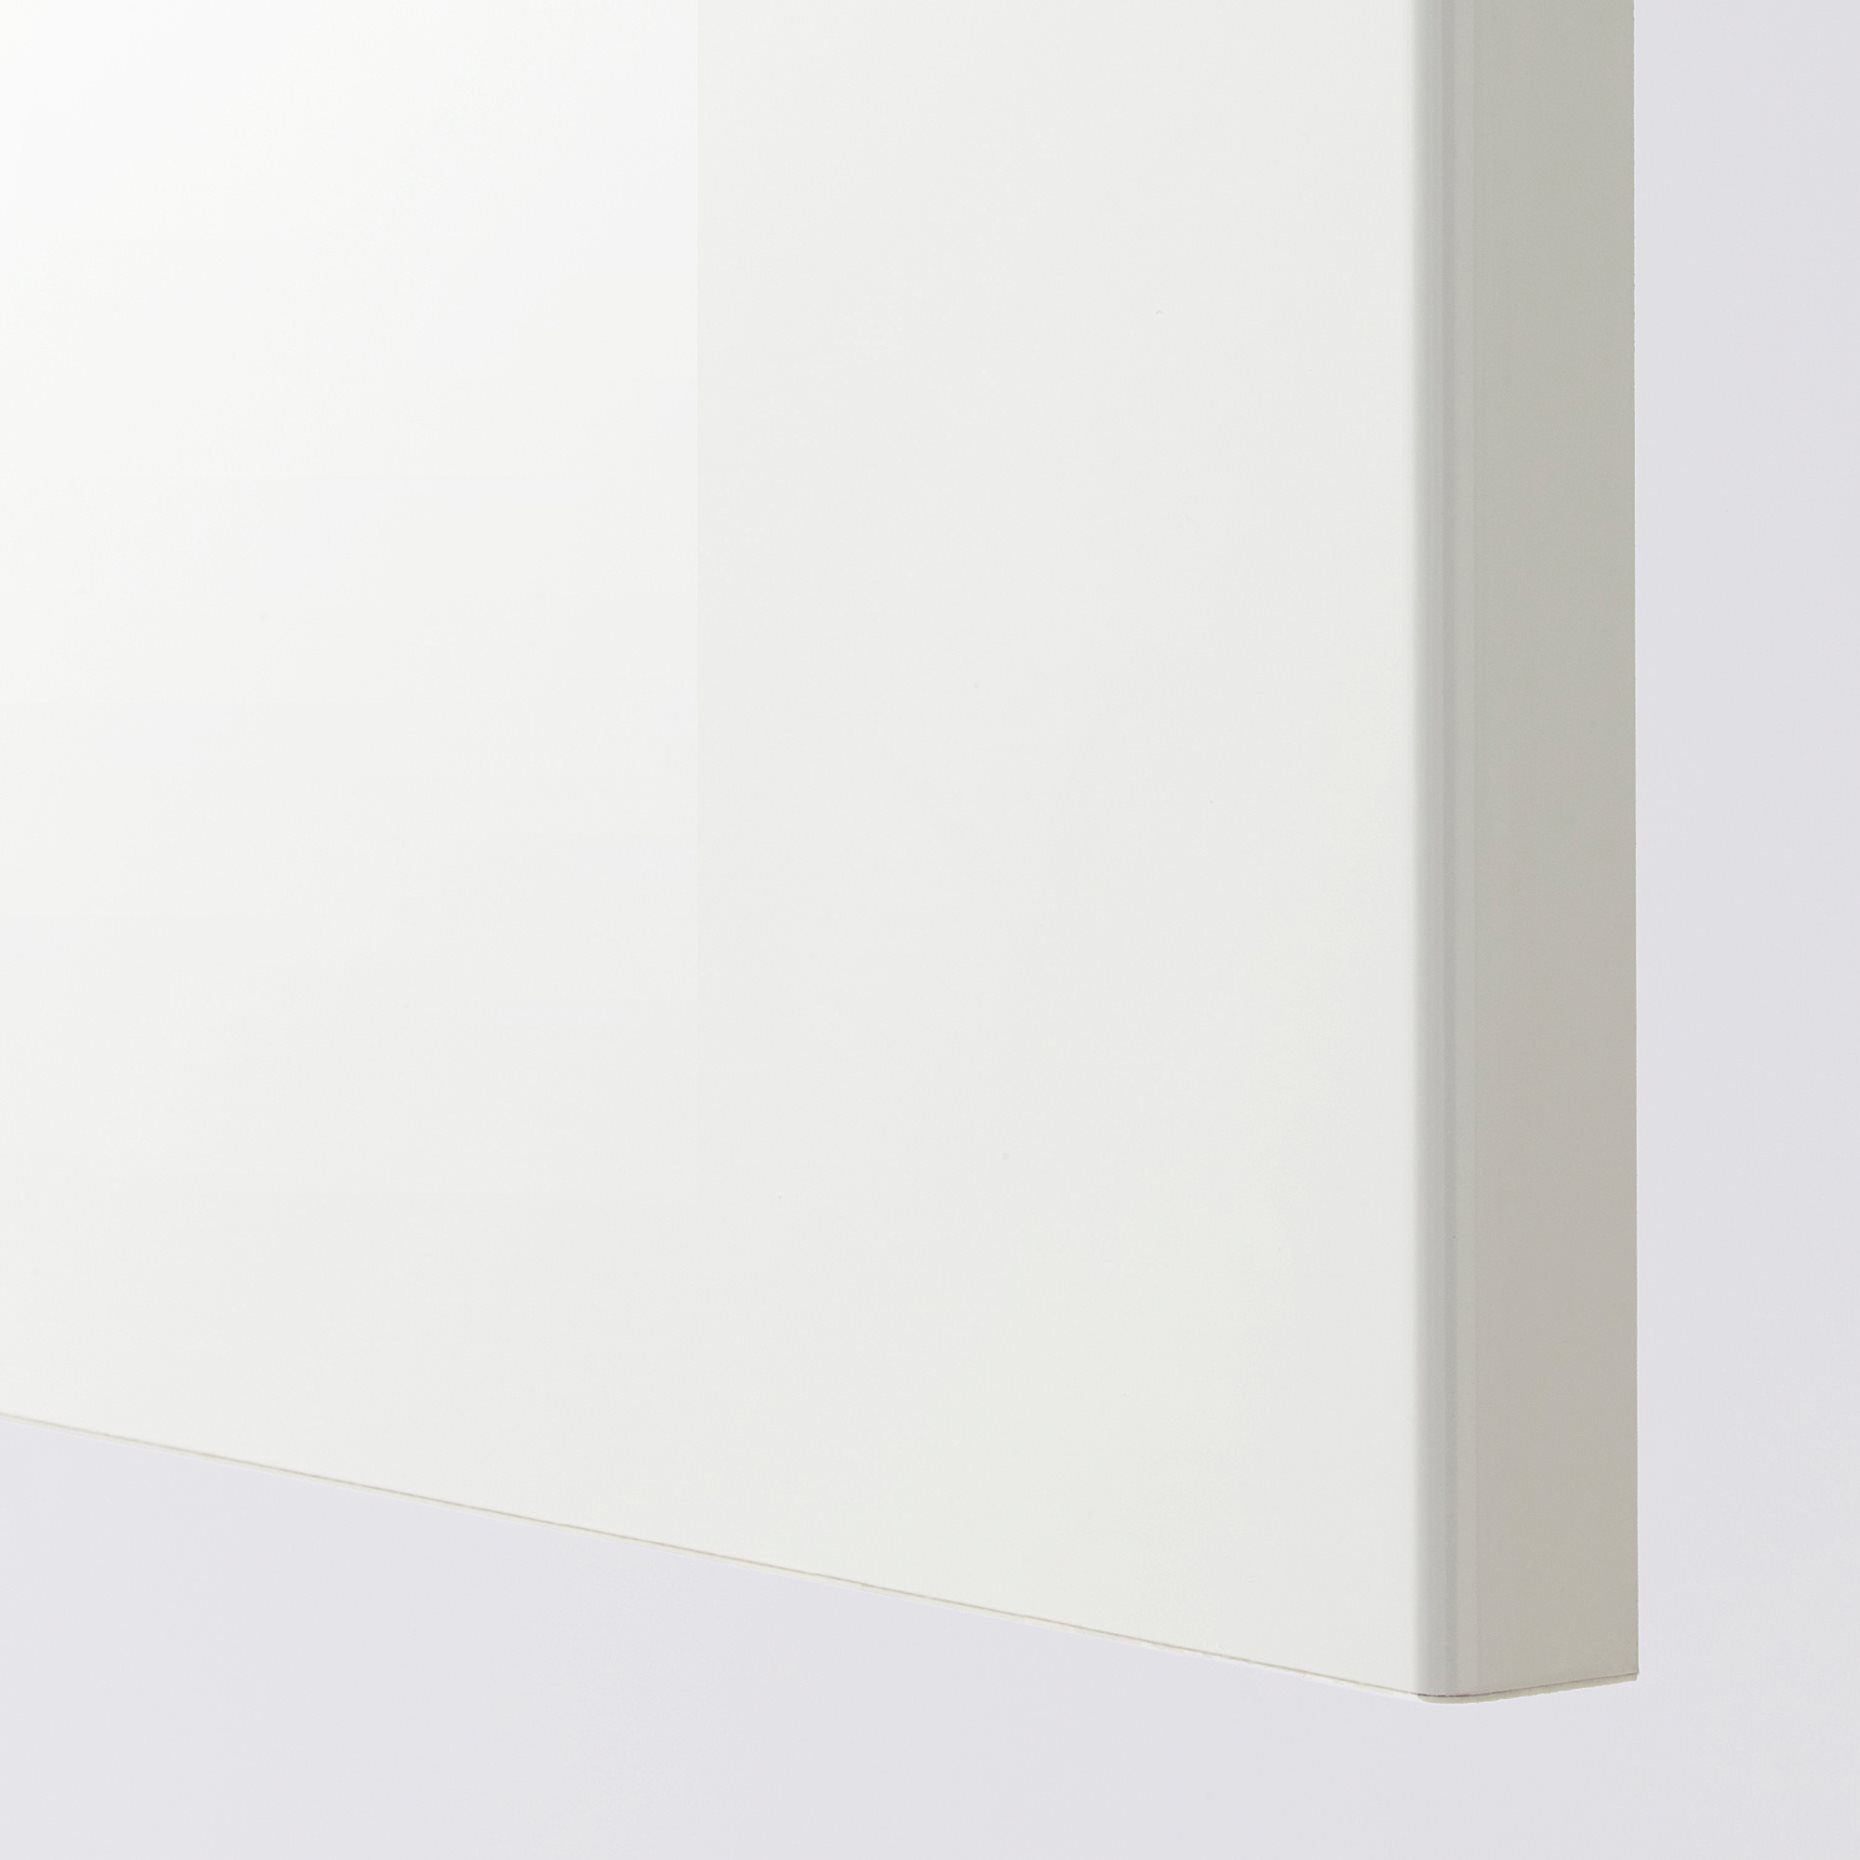 METOD, ντουλάπι βάσης για νεροχύτη με 2 πόρτες/πρόσοψη, 80x60 cm, 094.630.53